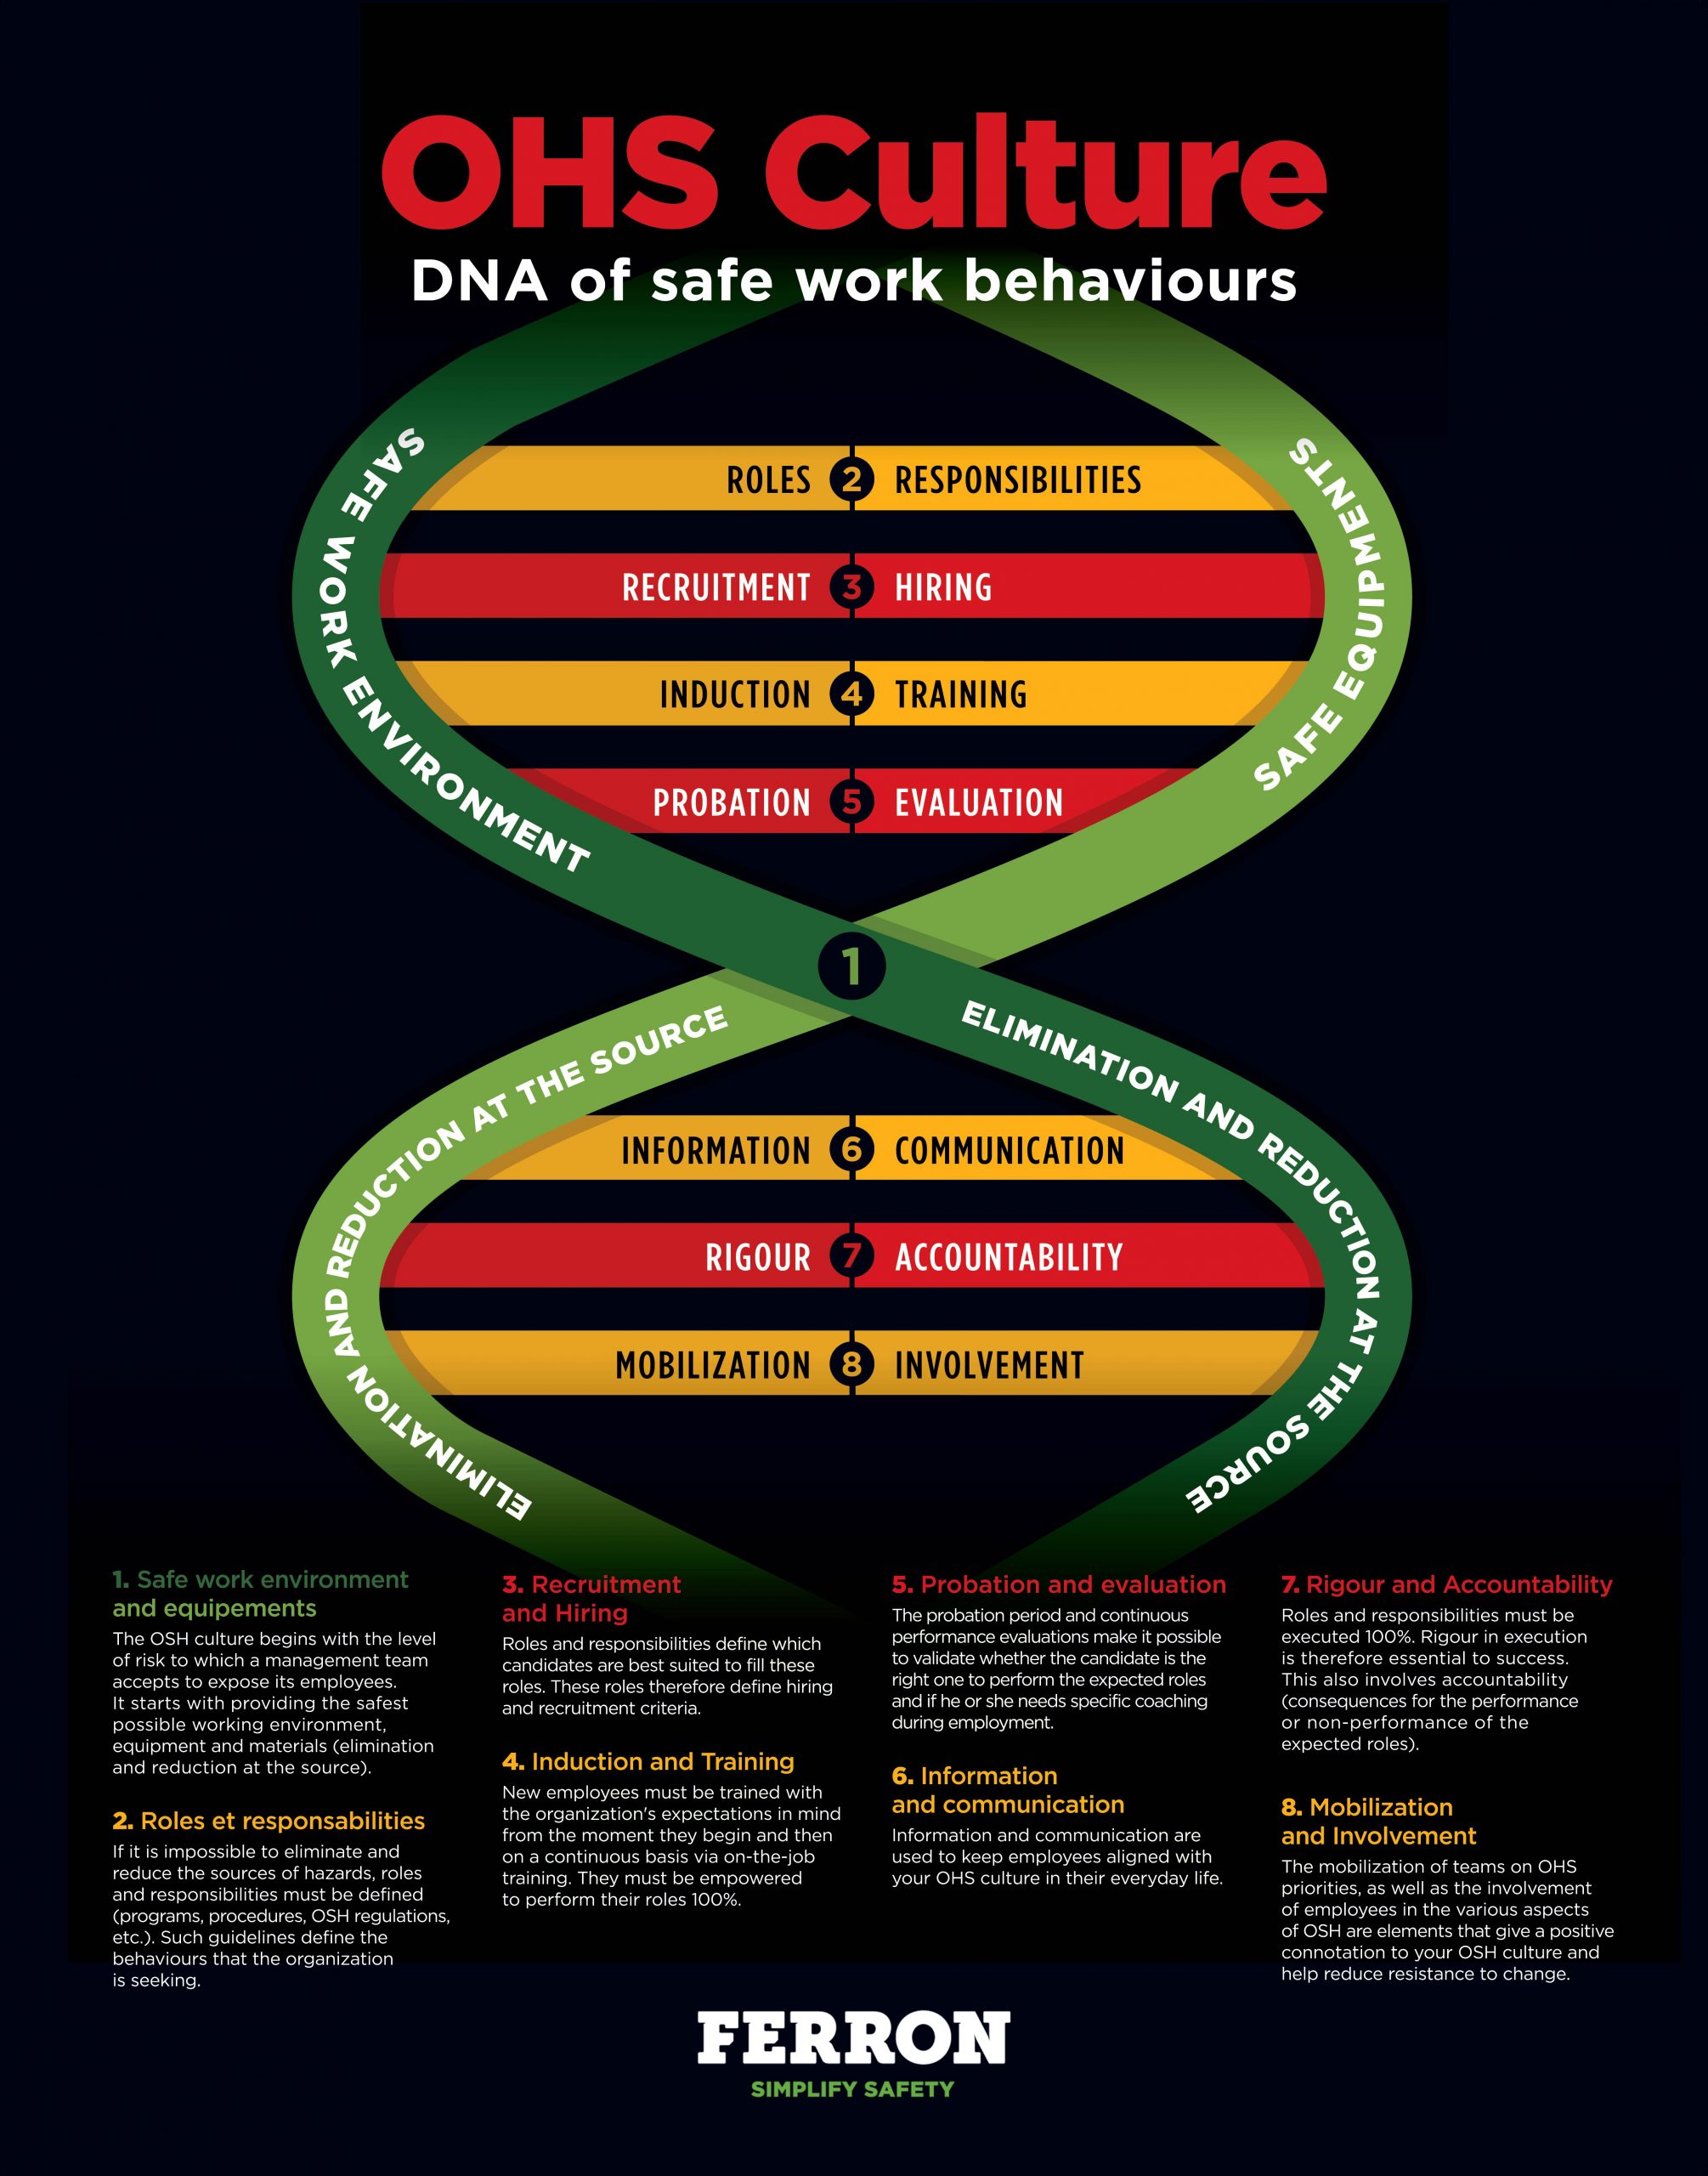 OHS Management Employee Safety Behaviors